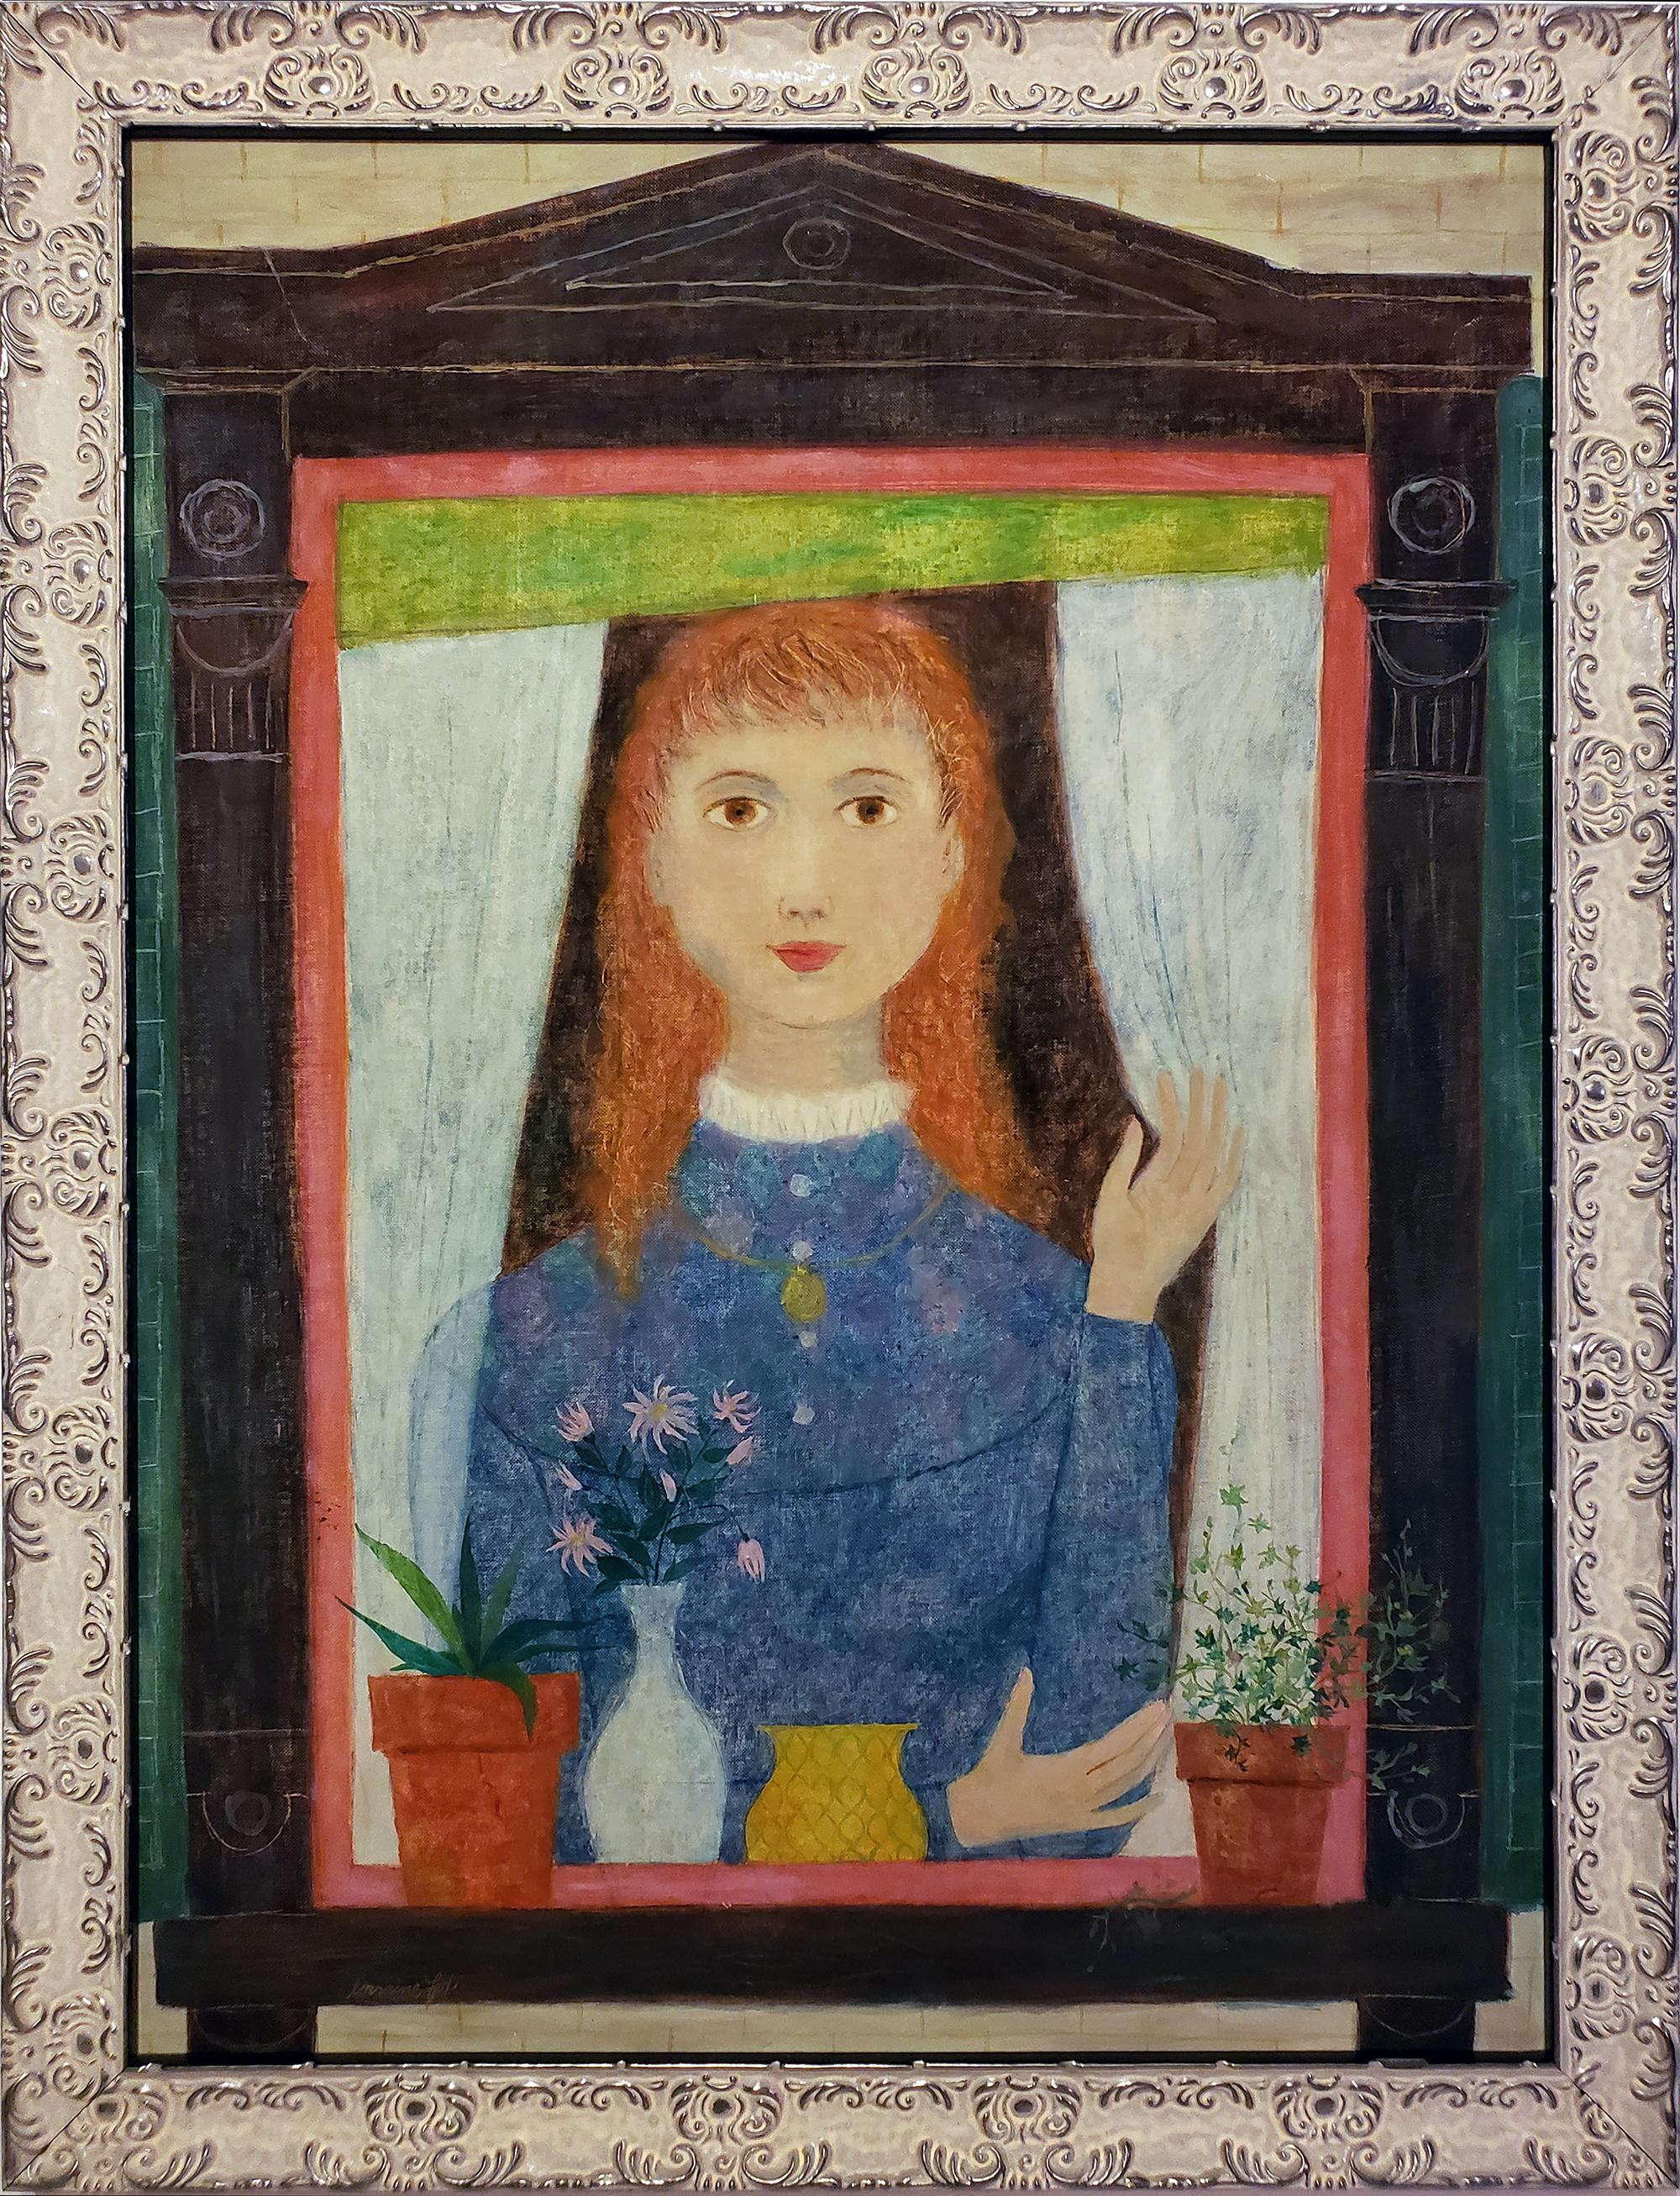 Lorraine Fox Portrait Painting - Redhead Girl in Window with Flower Pots, 